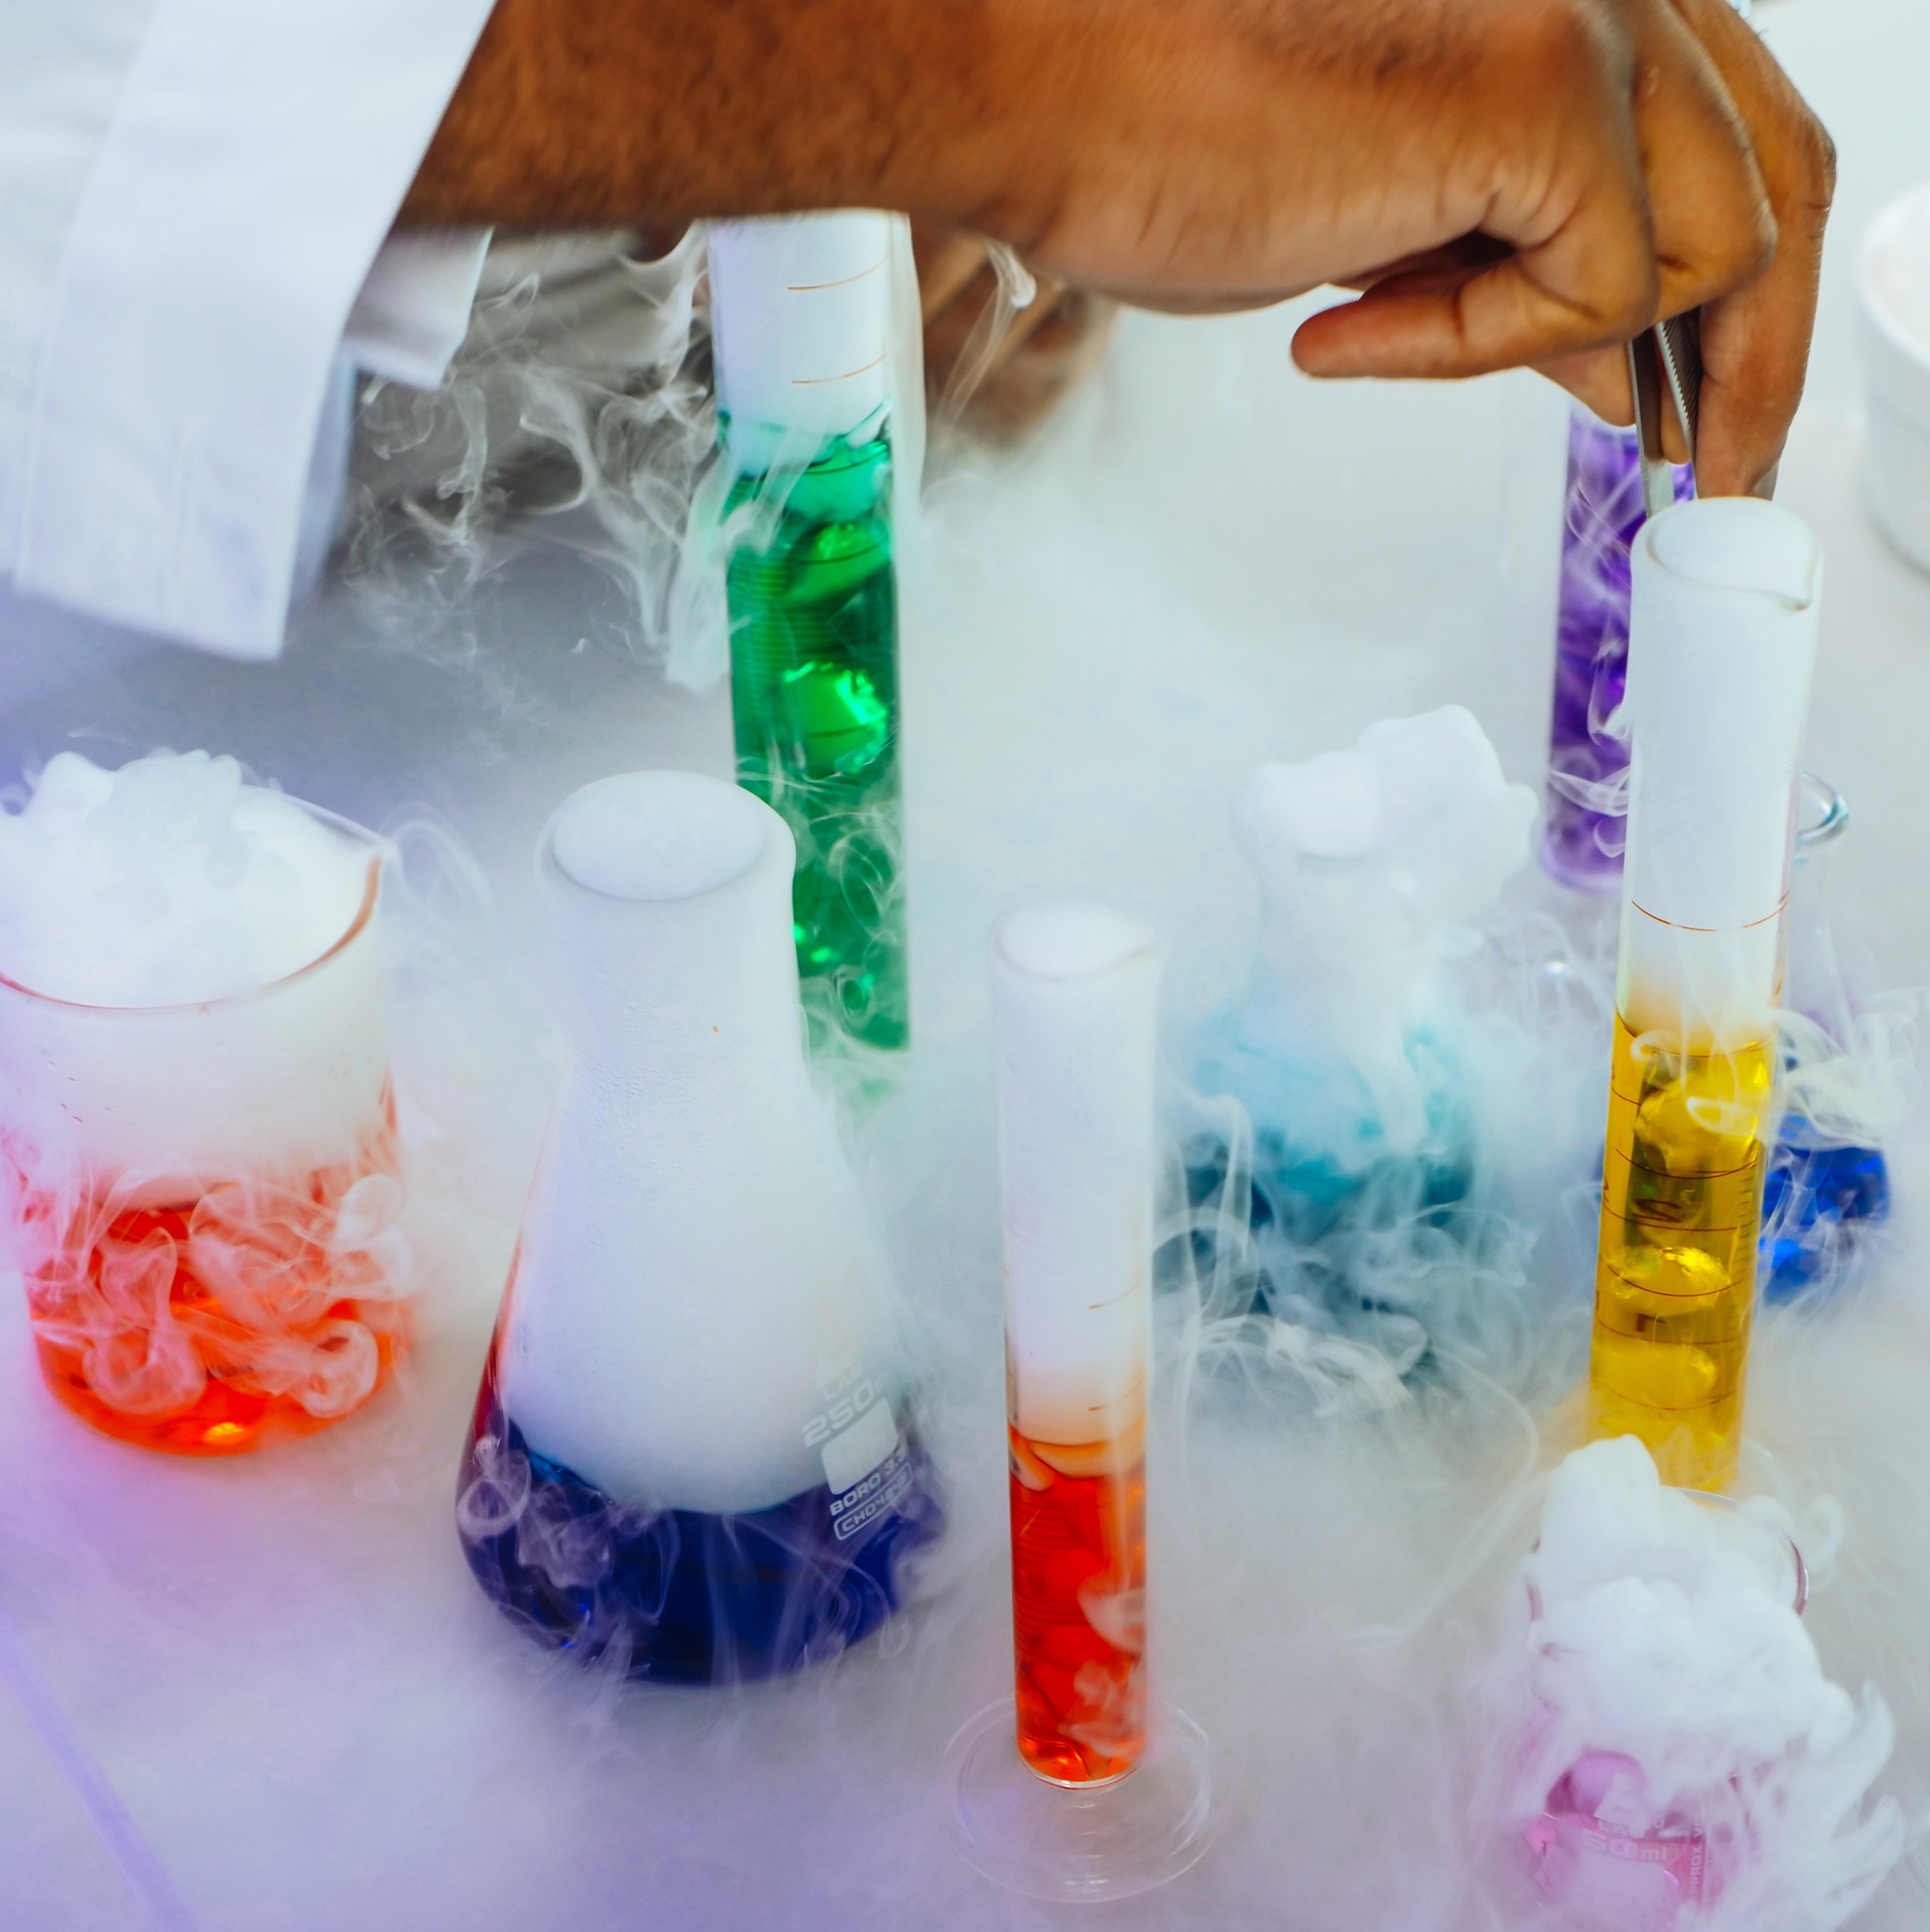 https://www.pexels.com/photo/colorful-liquids-in-laboratory-glasswares-8326459/